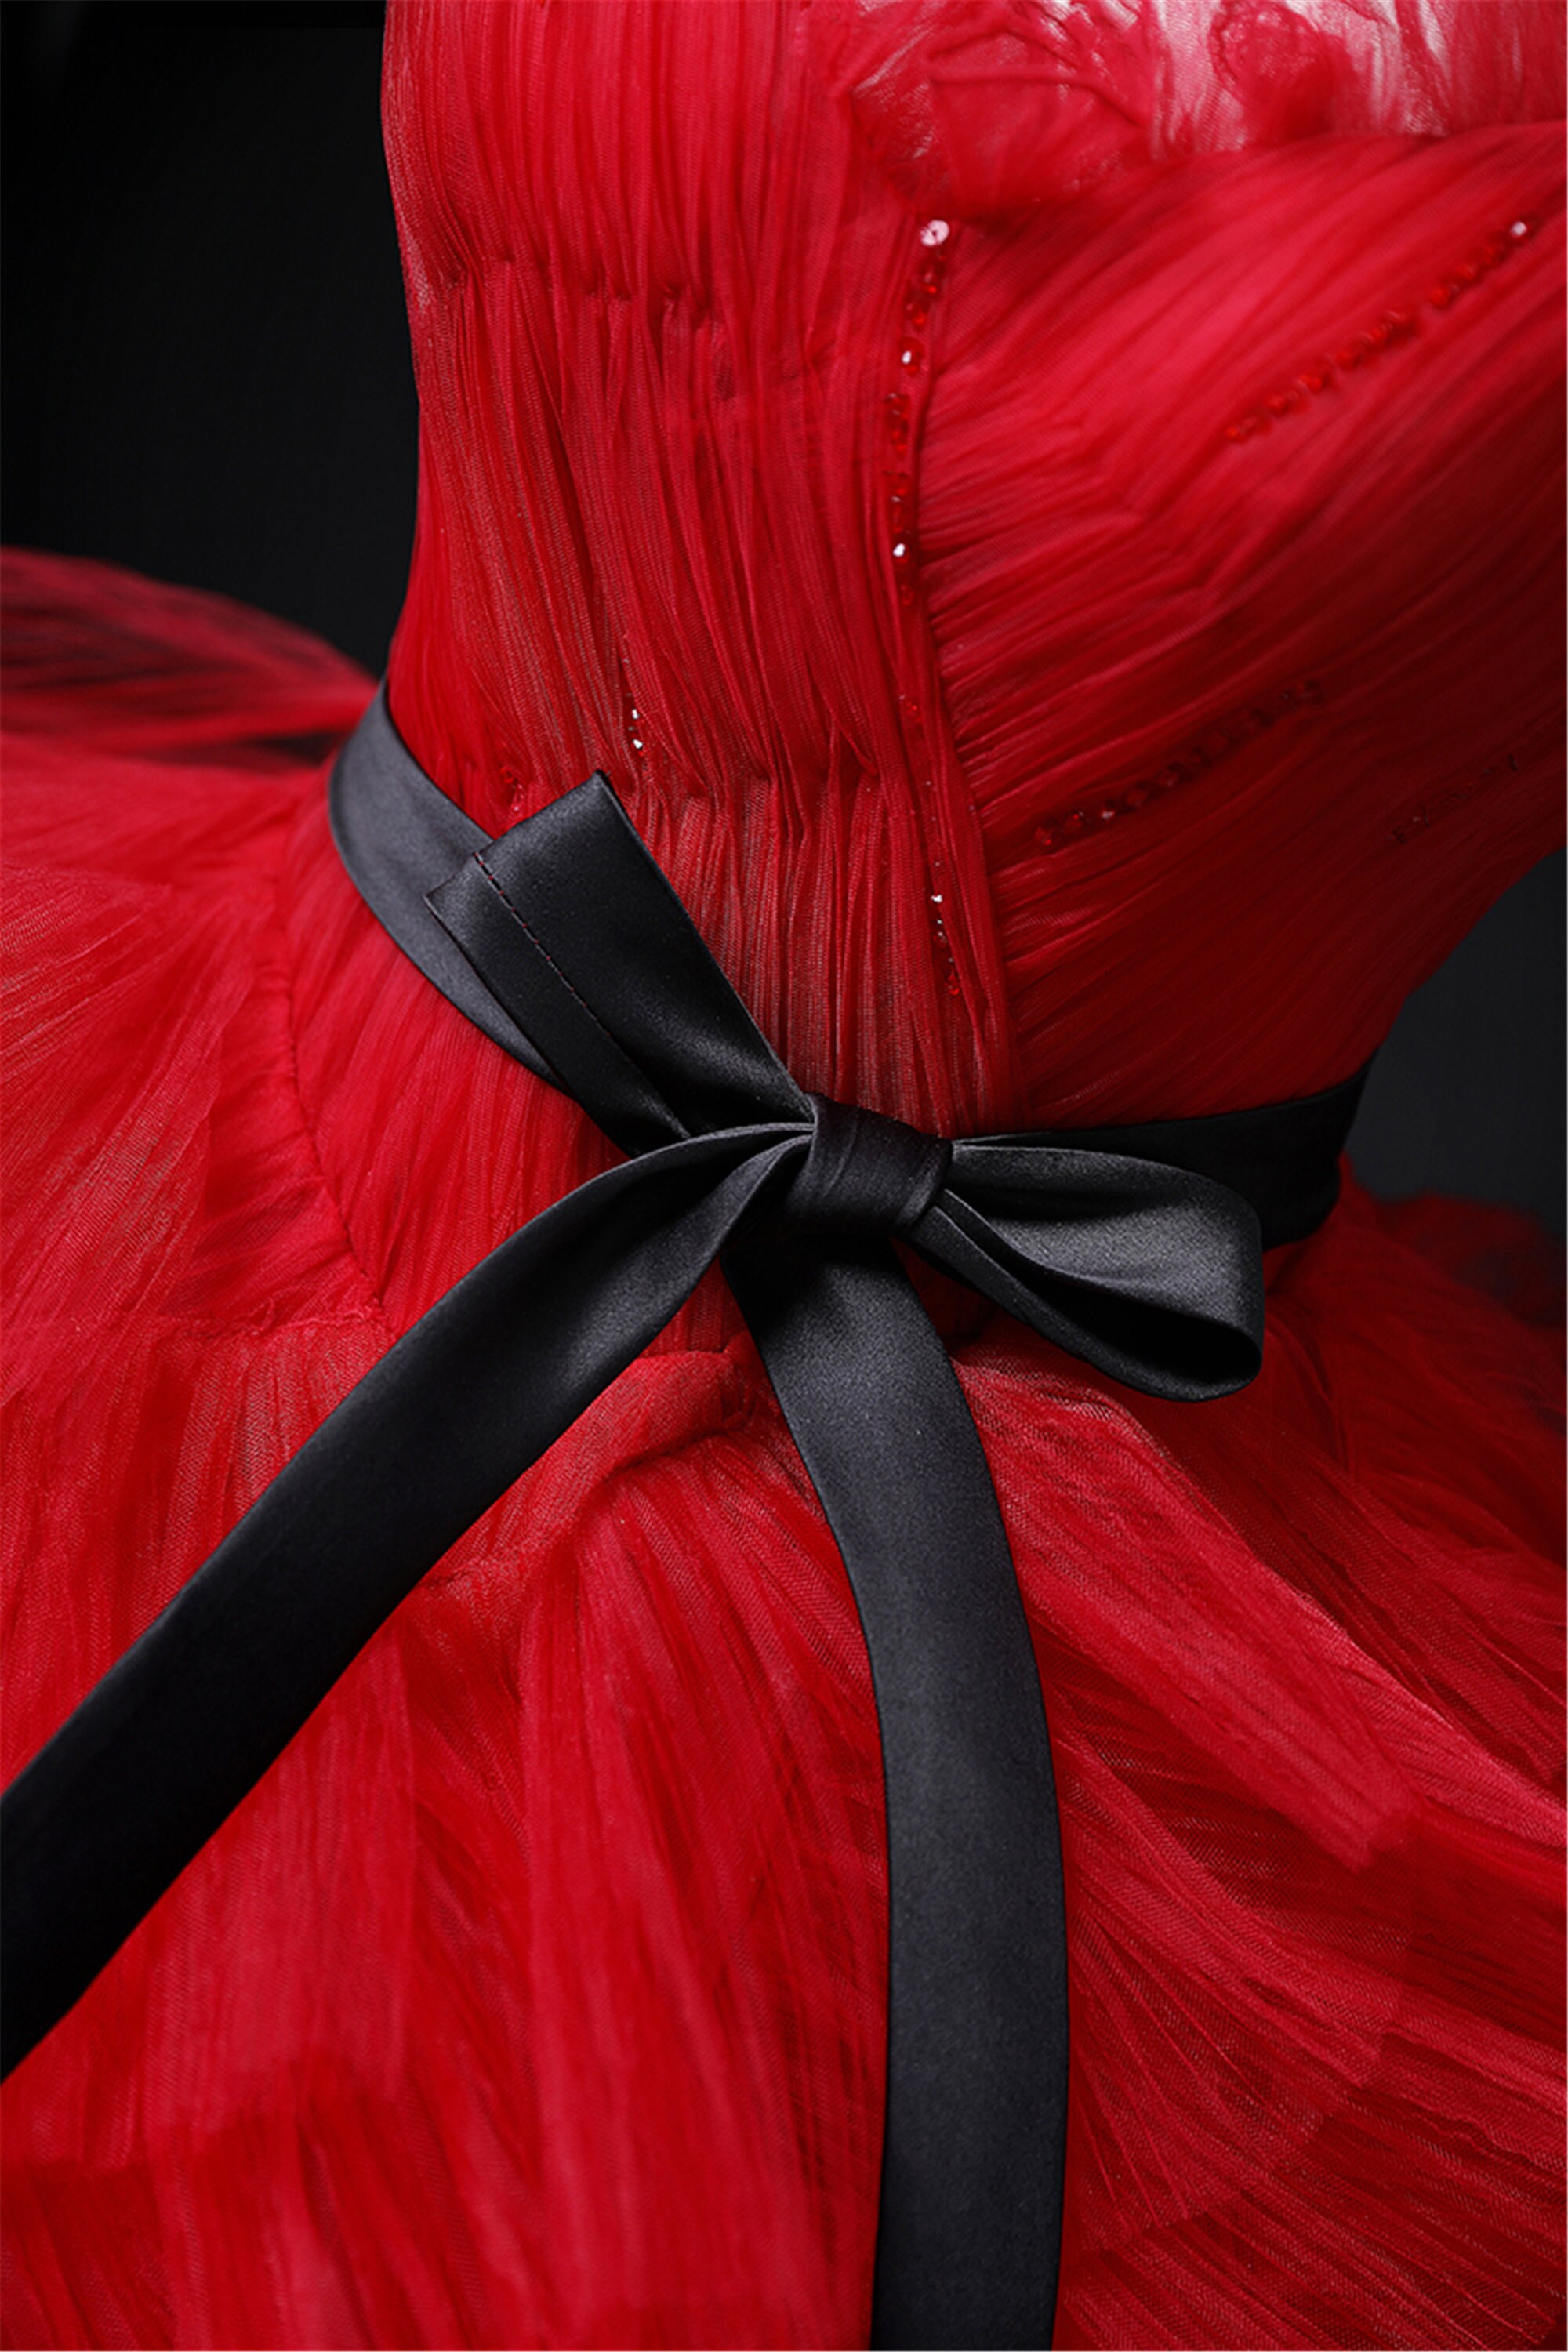 Strap Red Tulle Prom Dress Sleeveless Long Evening Dress - Etsy